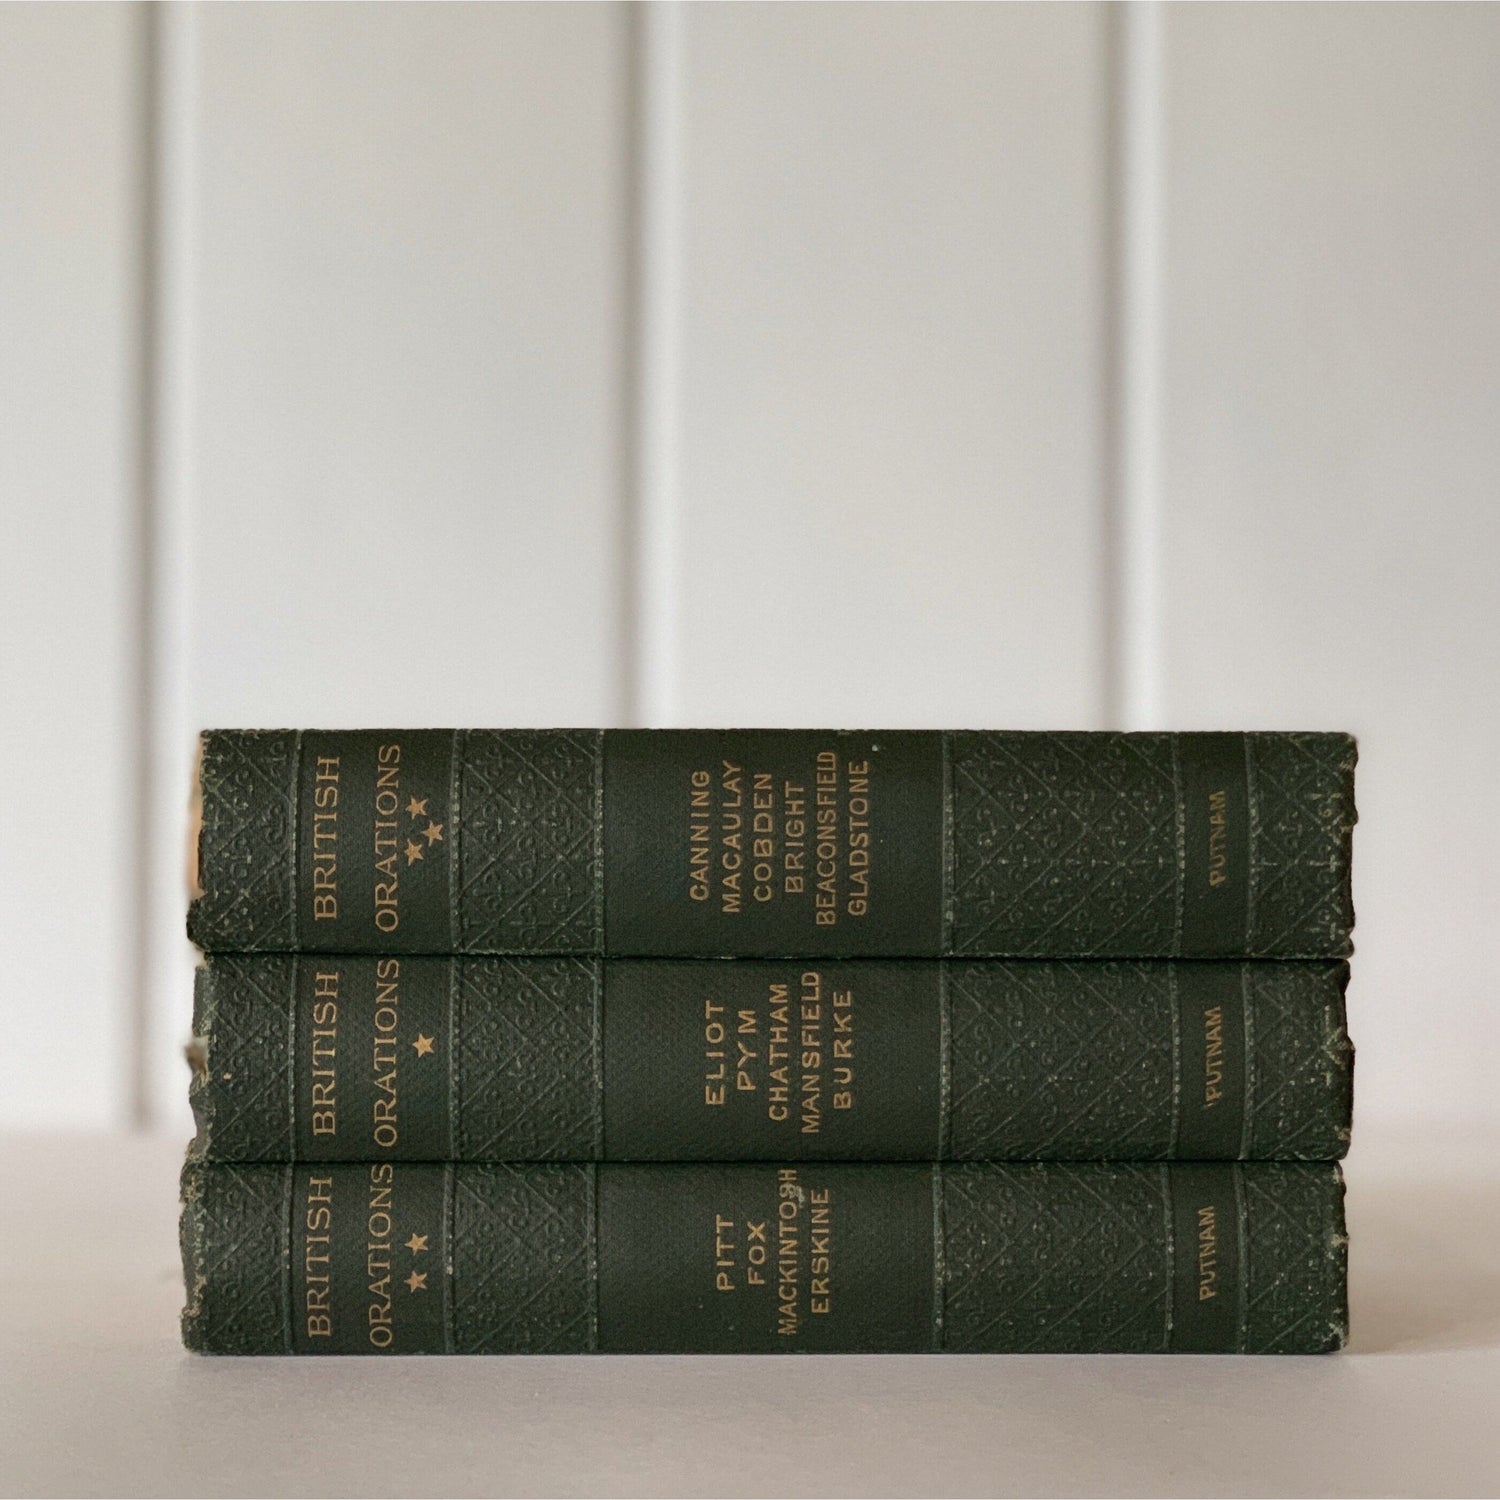 Representative British Orations, Antique Green Books for Shelf Styling, 1887